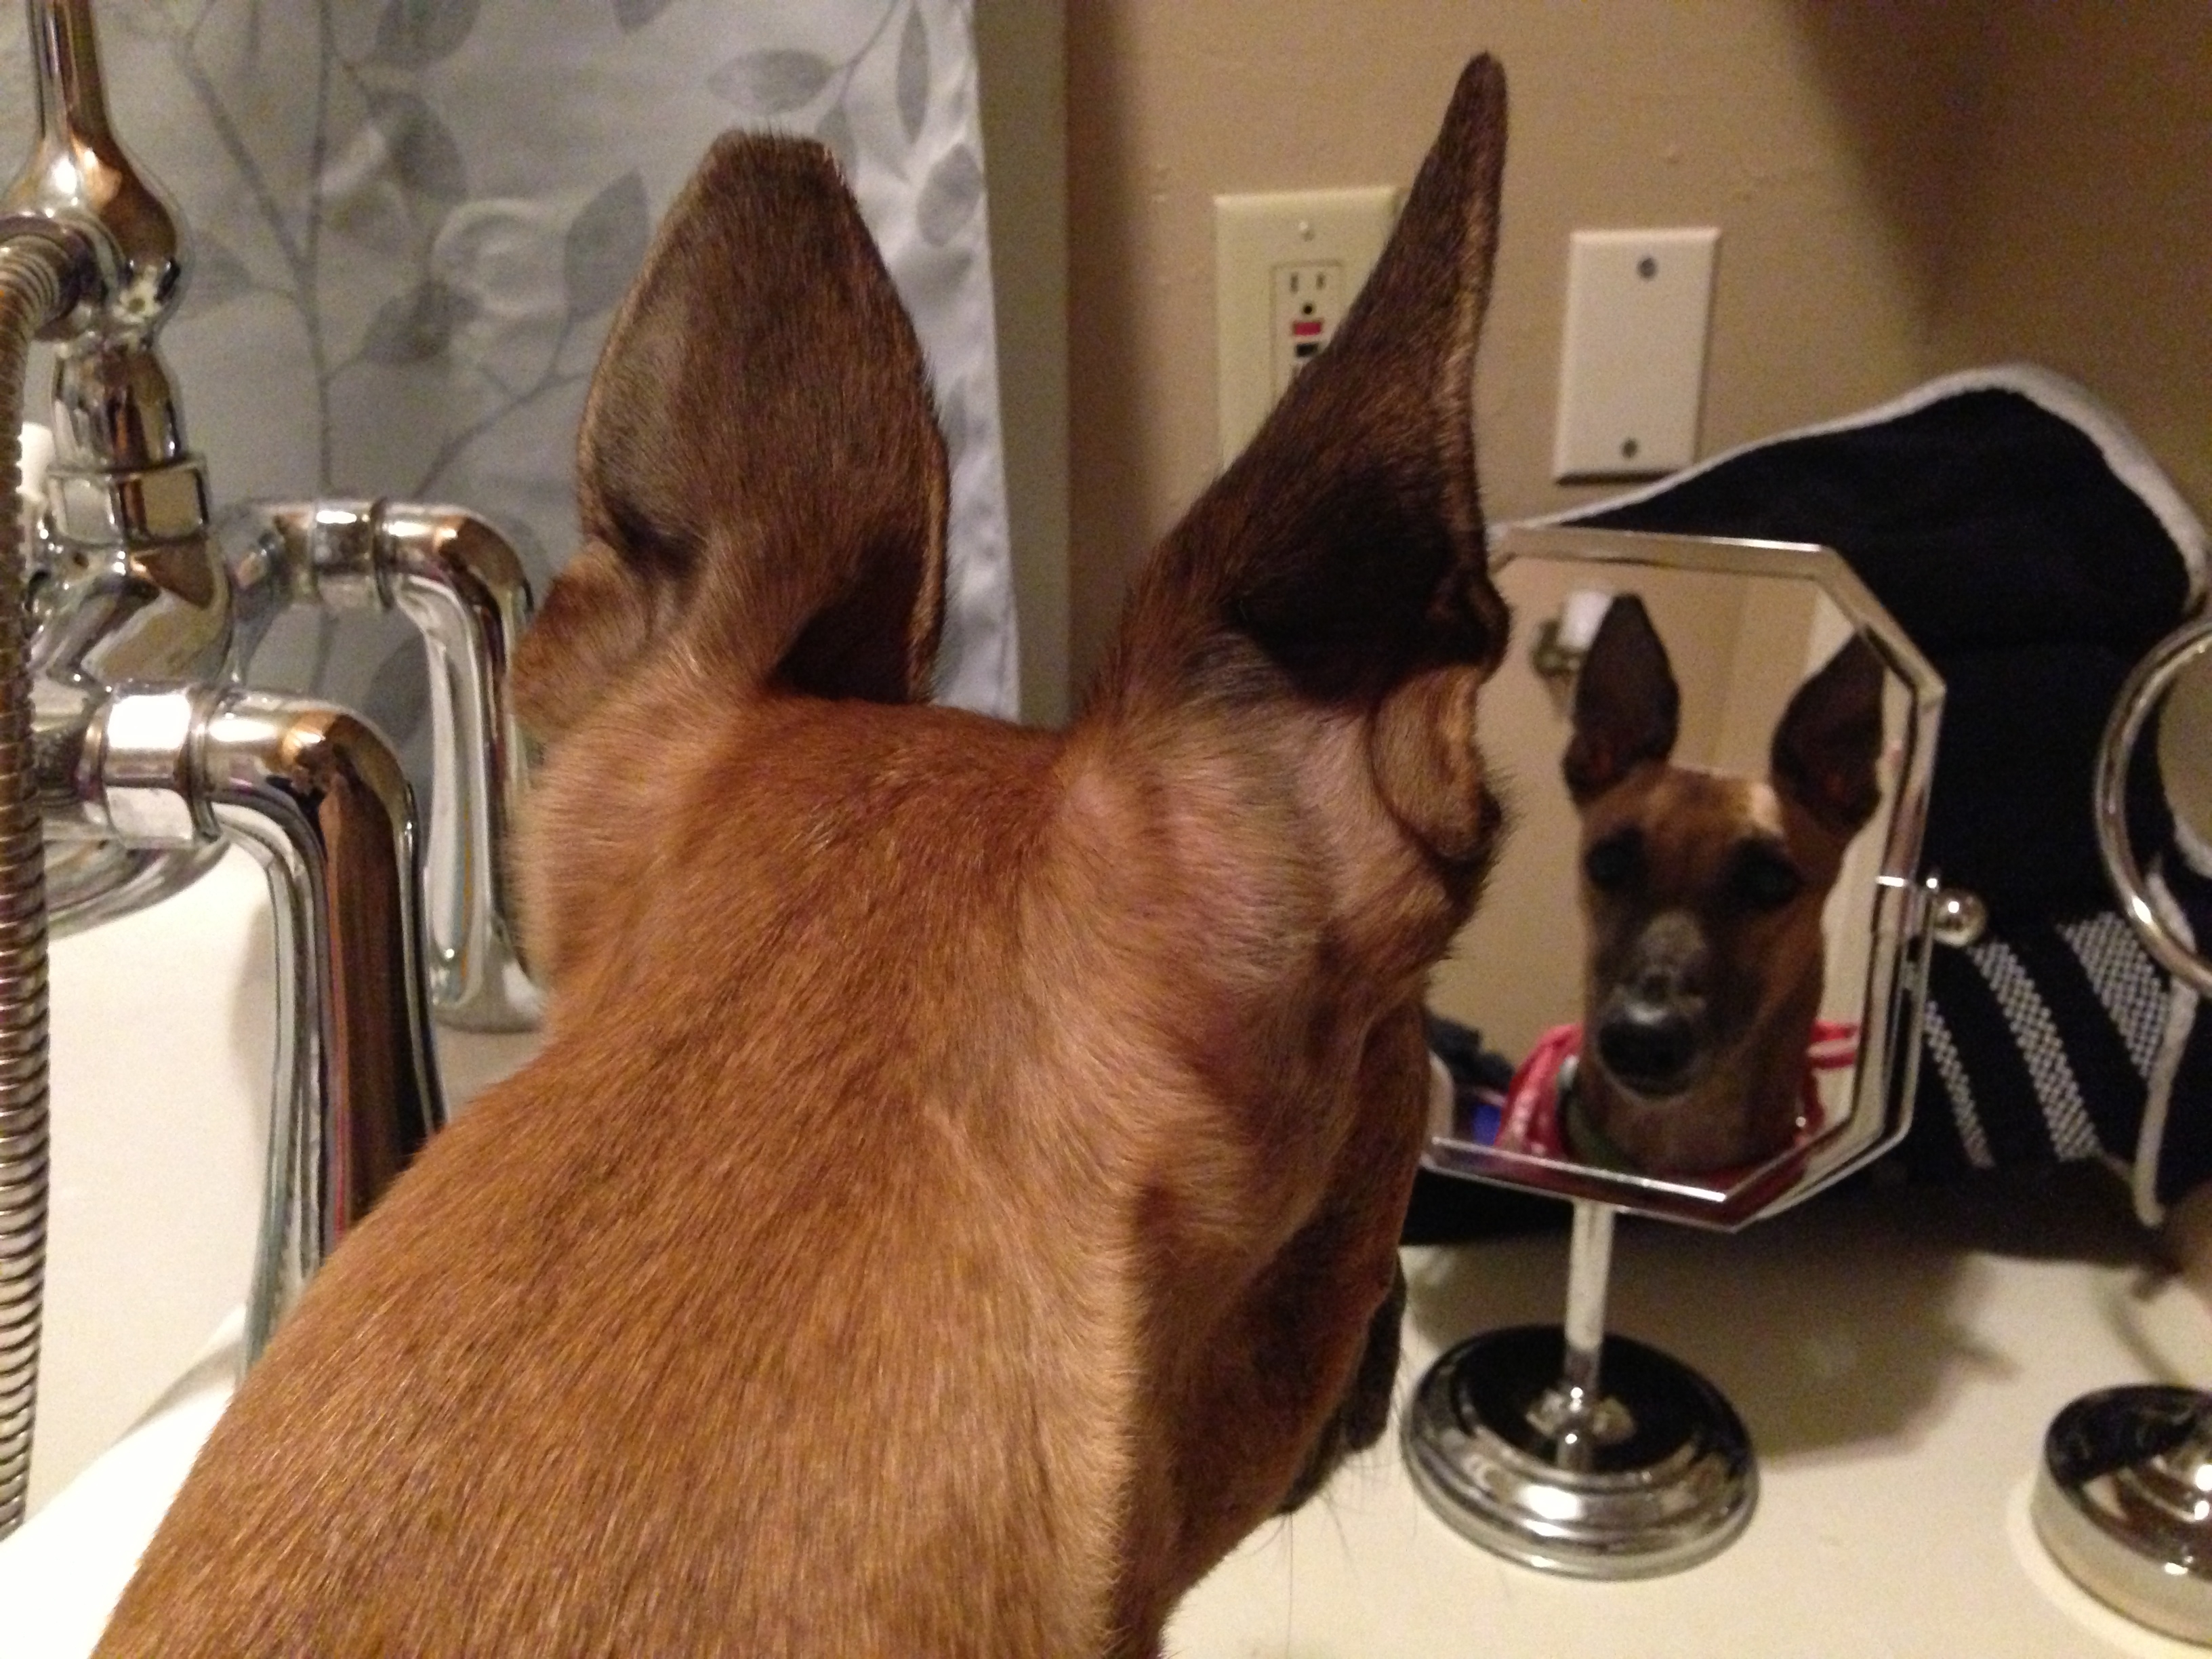 Mirror, Mirror On the Sink . . .